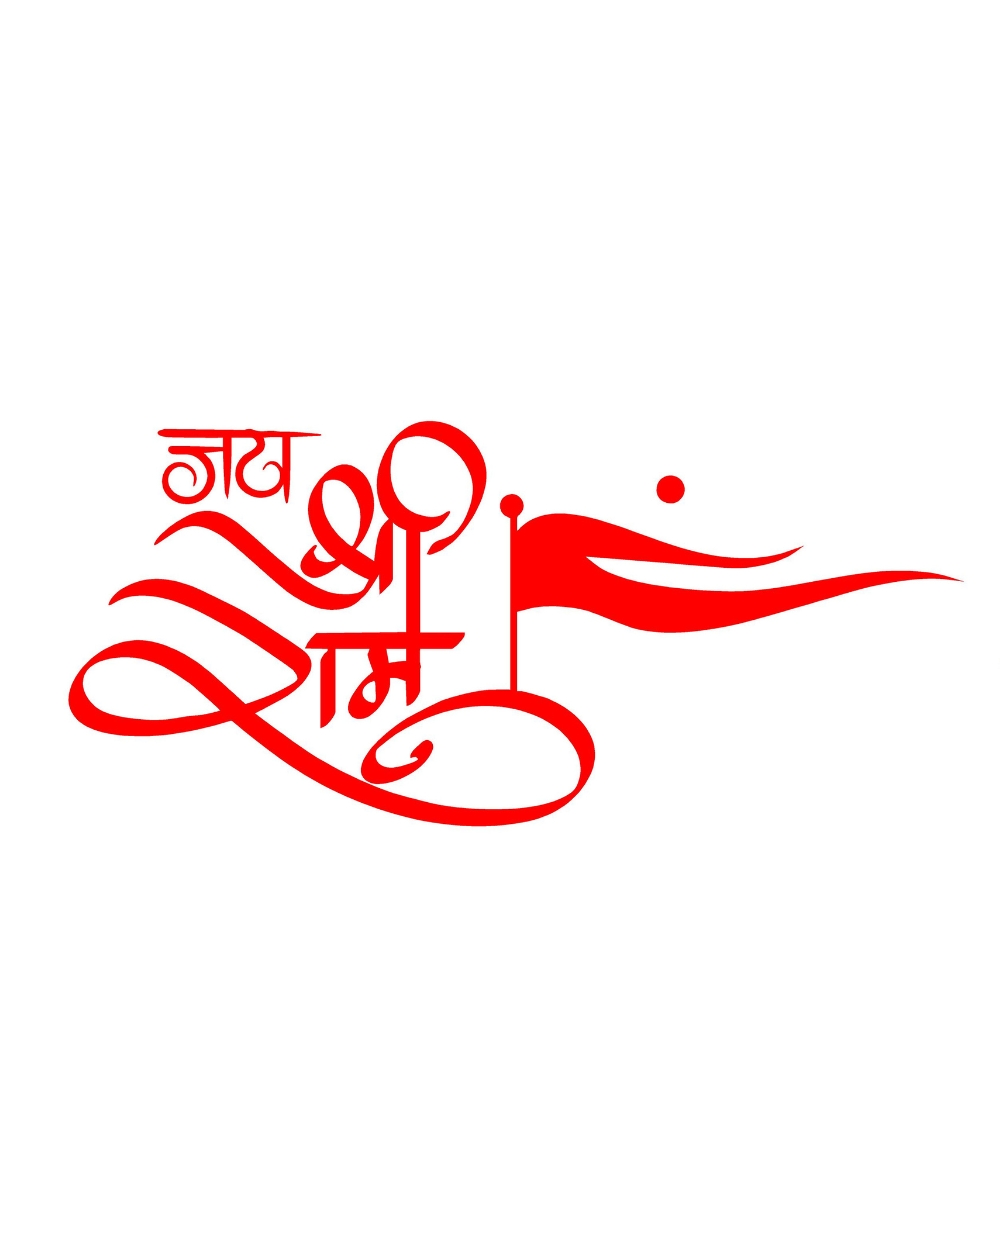 jai shree ram bajrangbali wallpaper for mobile | Hanuman images